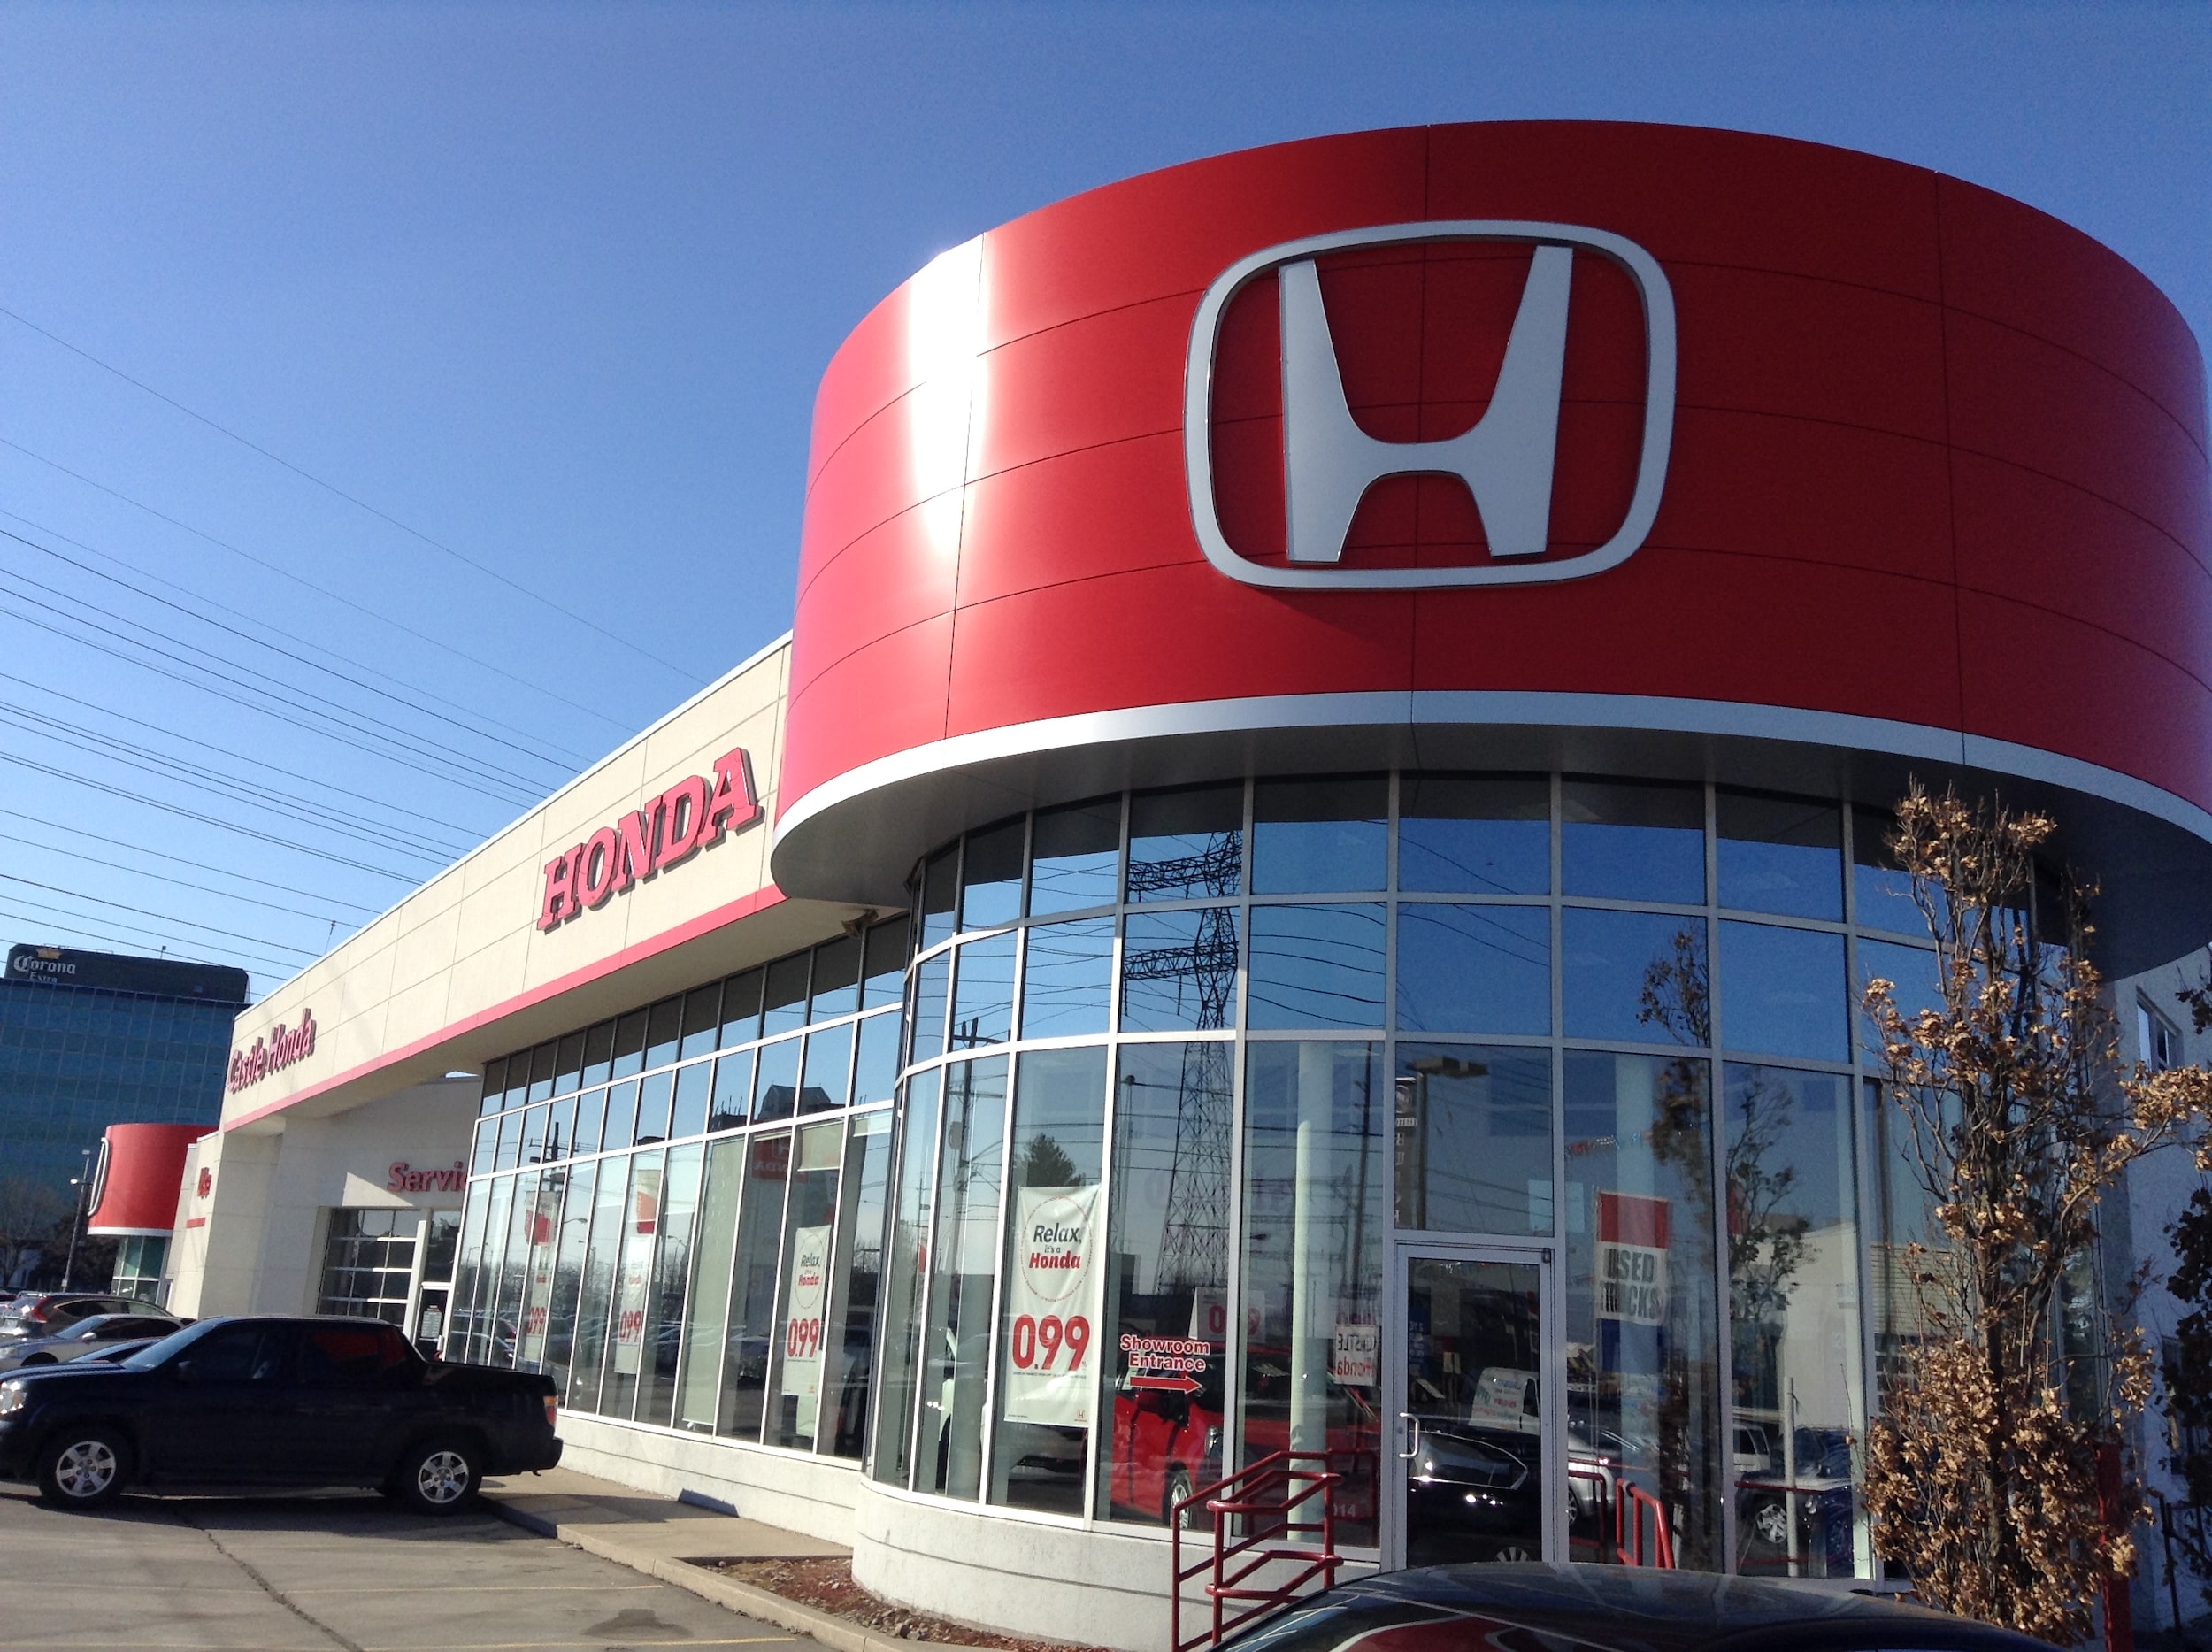 Honda dealership in toronto canada #1